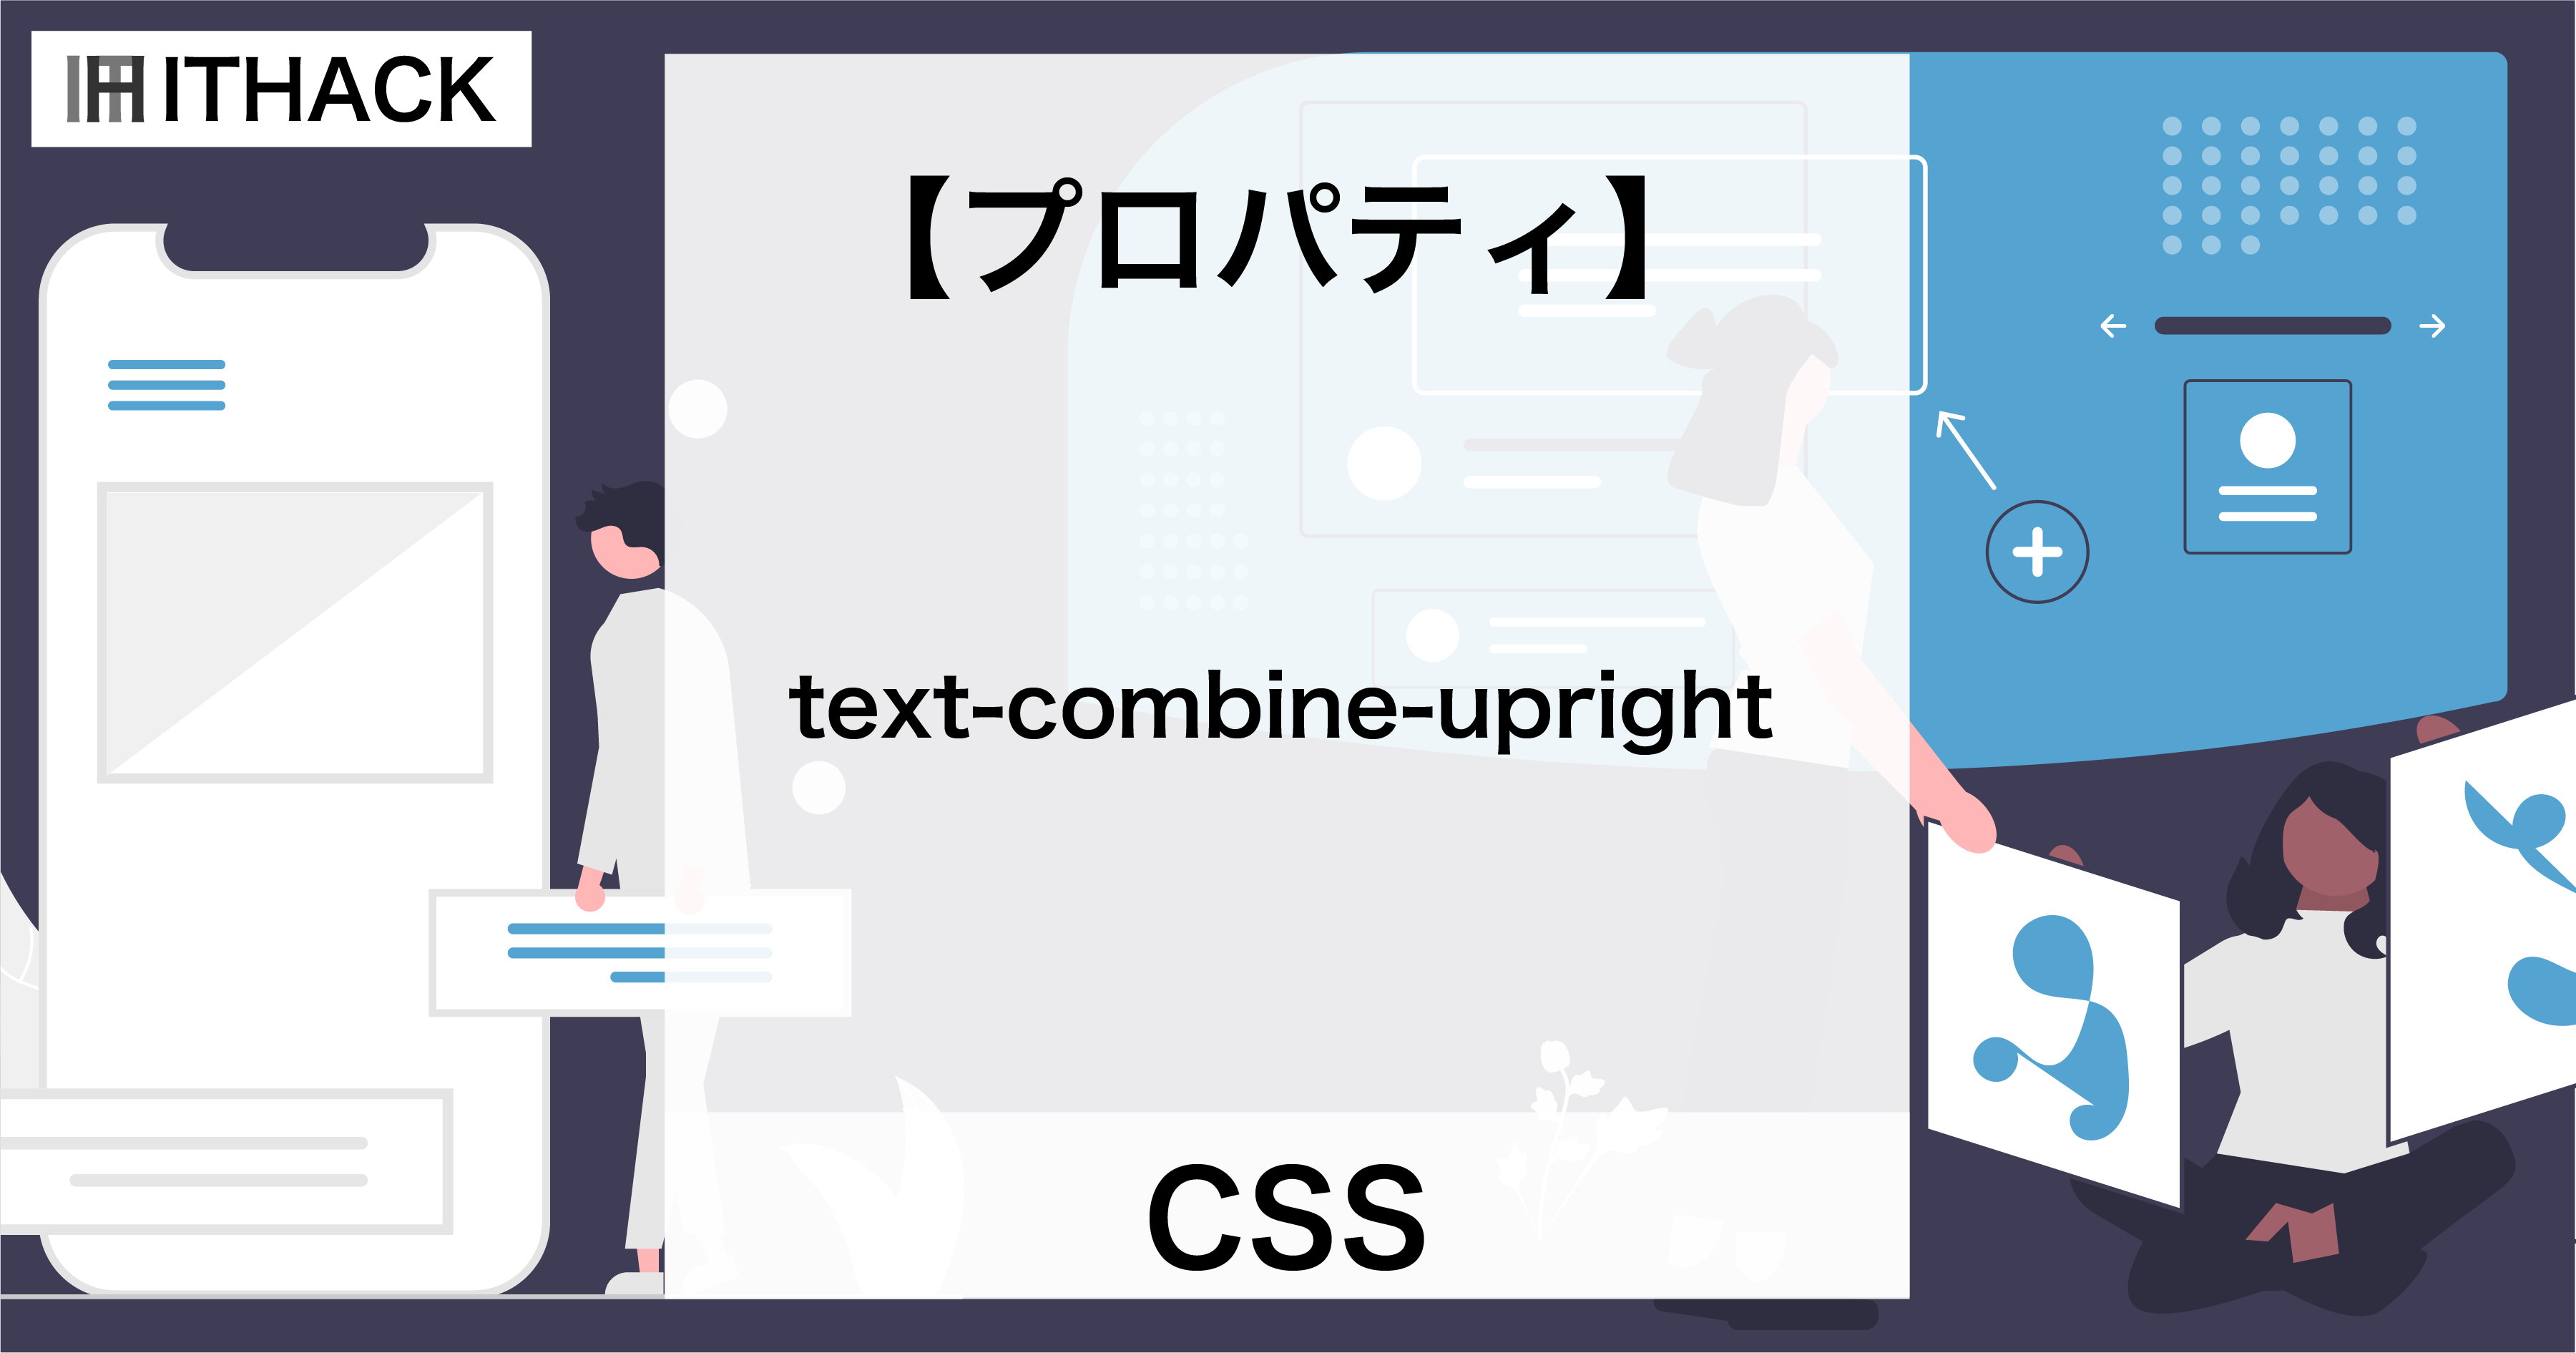 【CSS】text-combine-upright - １文字分のテキスト